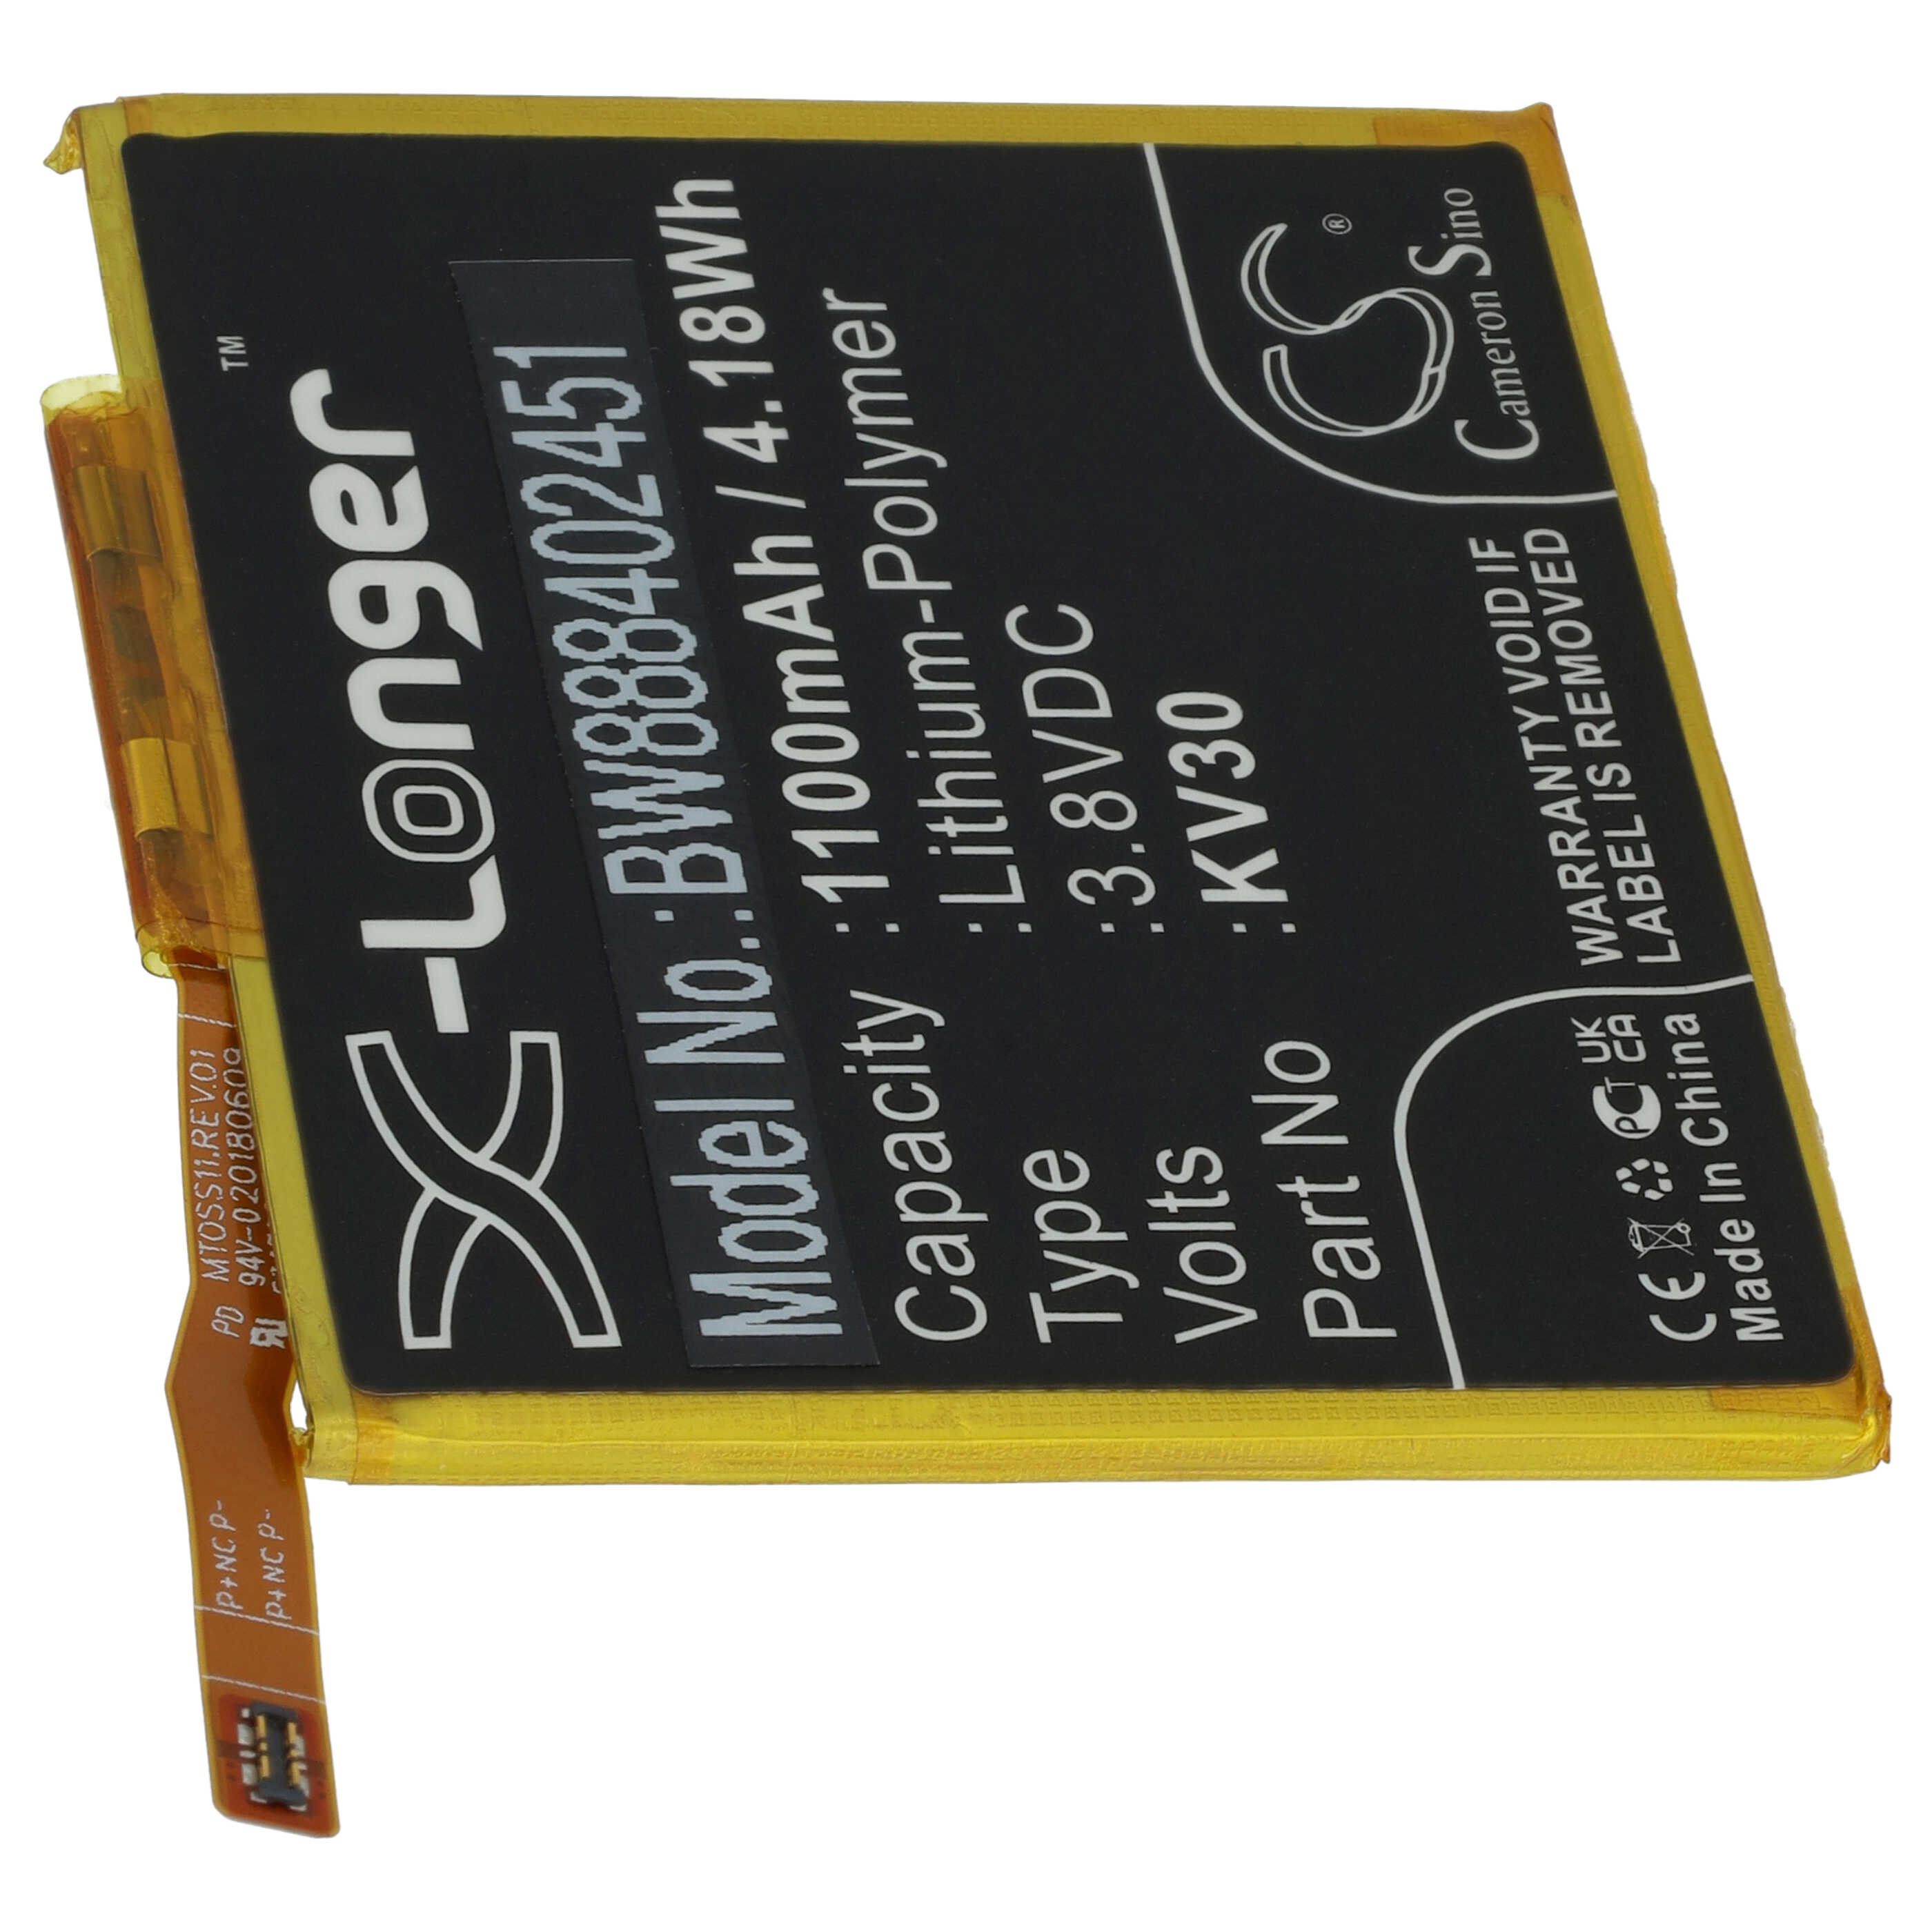 Batterie remplace Motorola KV30, SB18C40007 pour téléphone portable - 1100mAh, 3,8V, Li-polymère